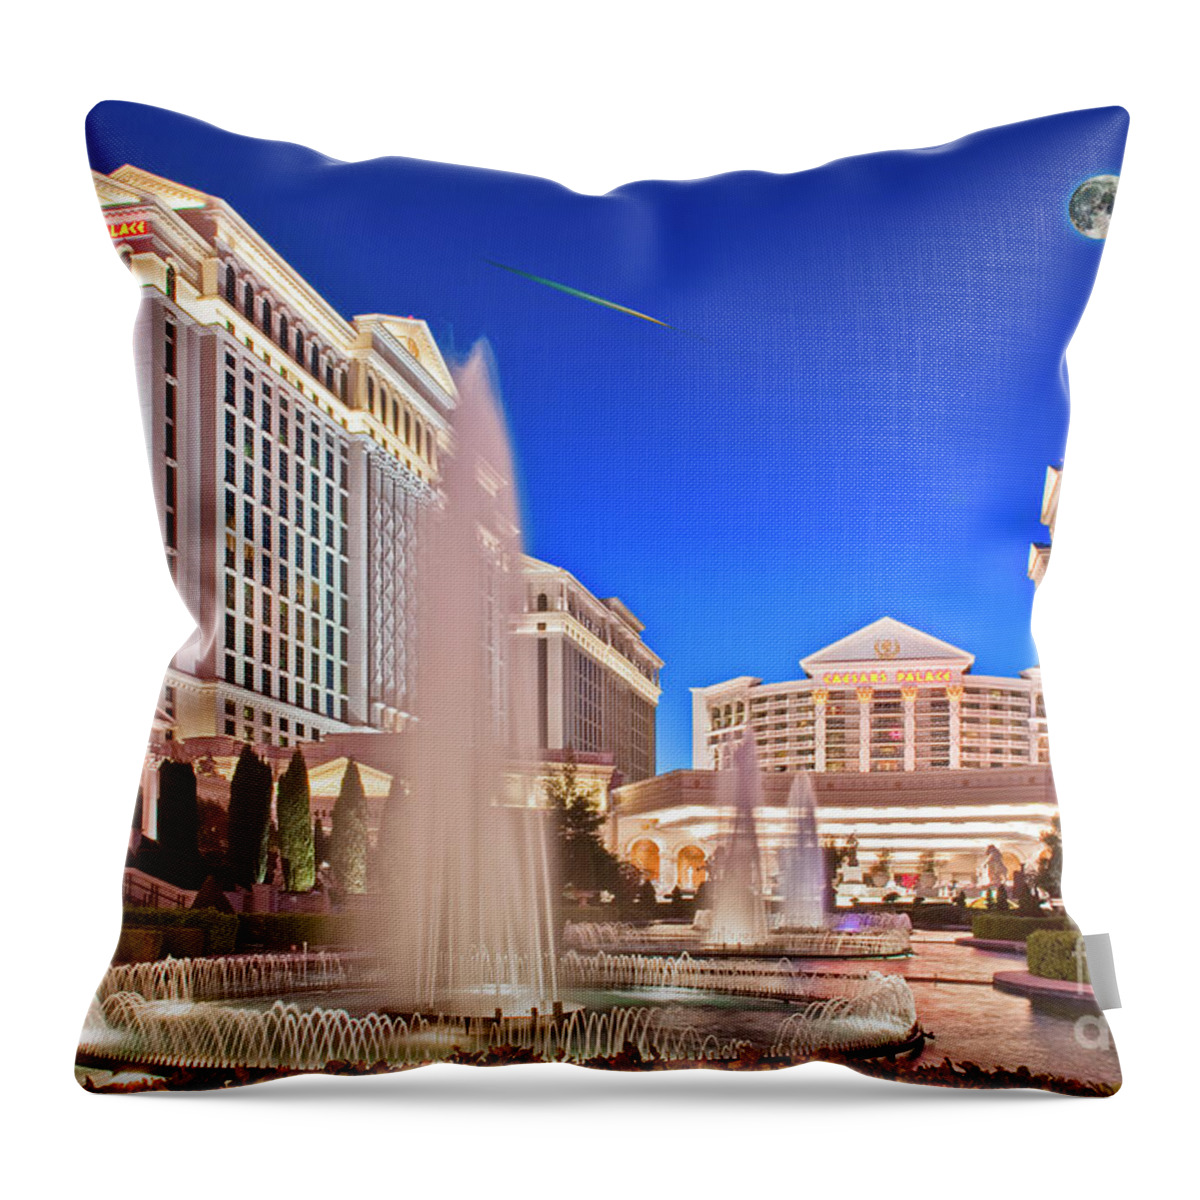 Casinos Throw Pillow featuring the photograph Caesars Palace Las Vegas Nevada by David Zanzinger